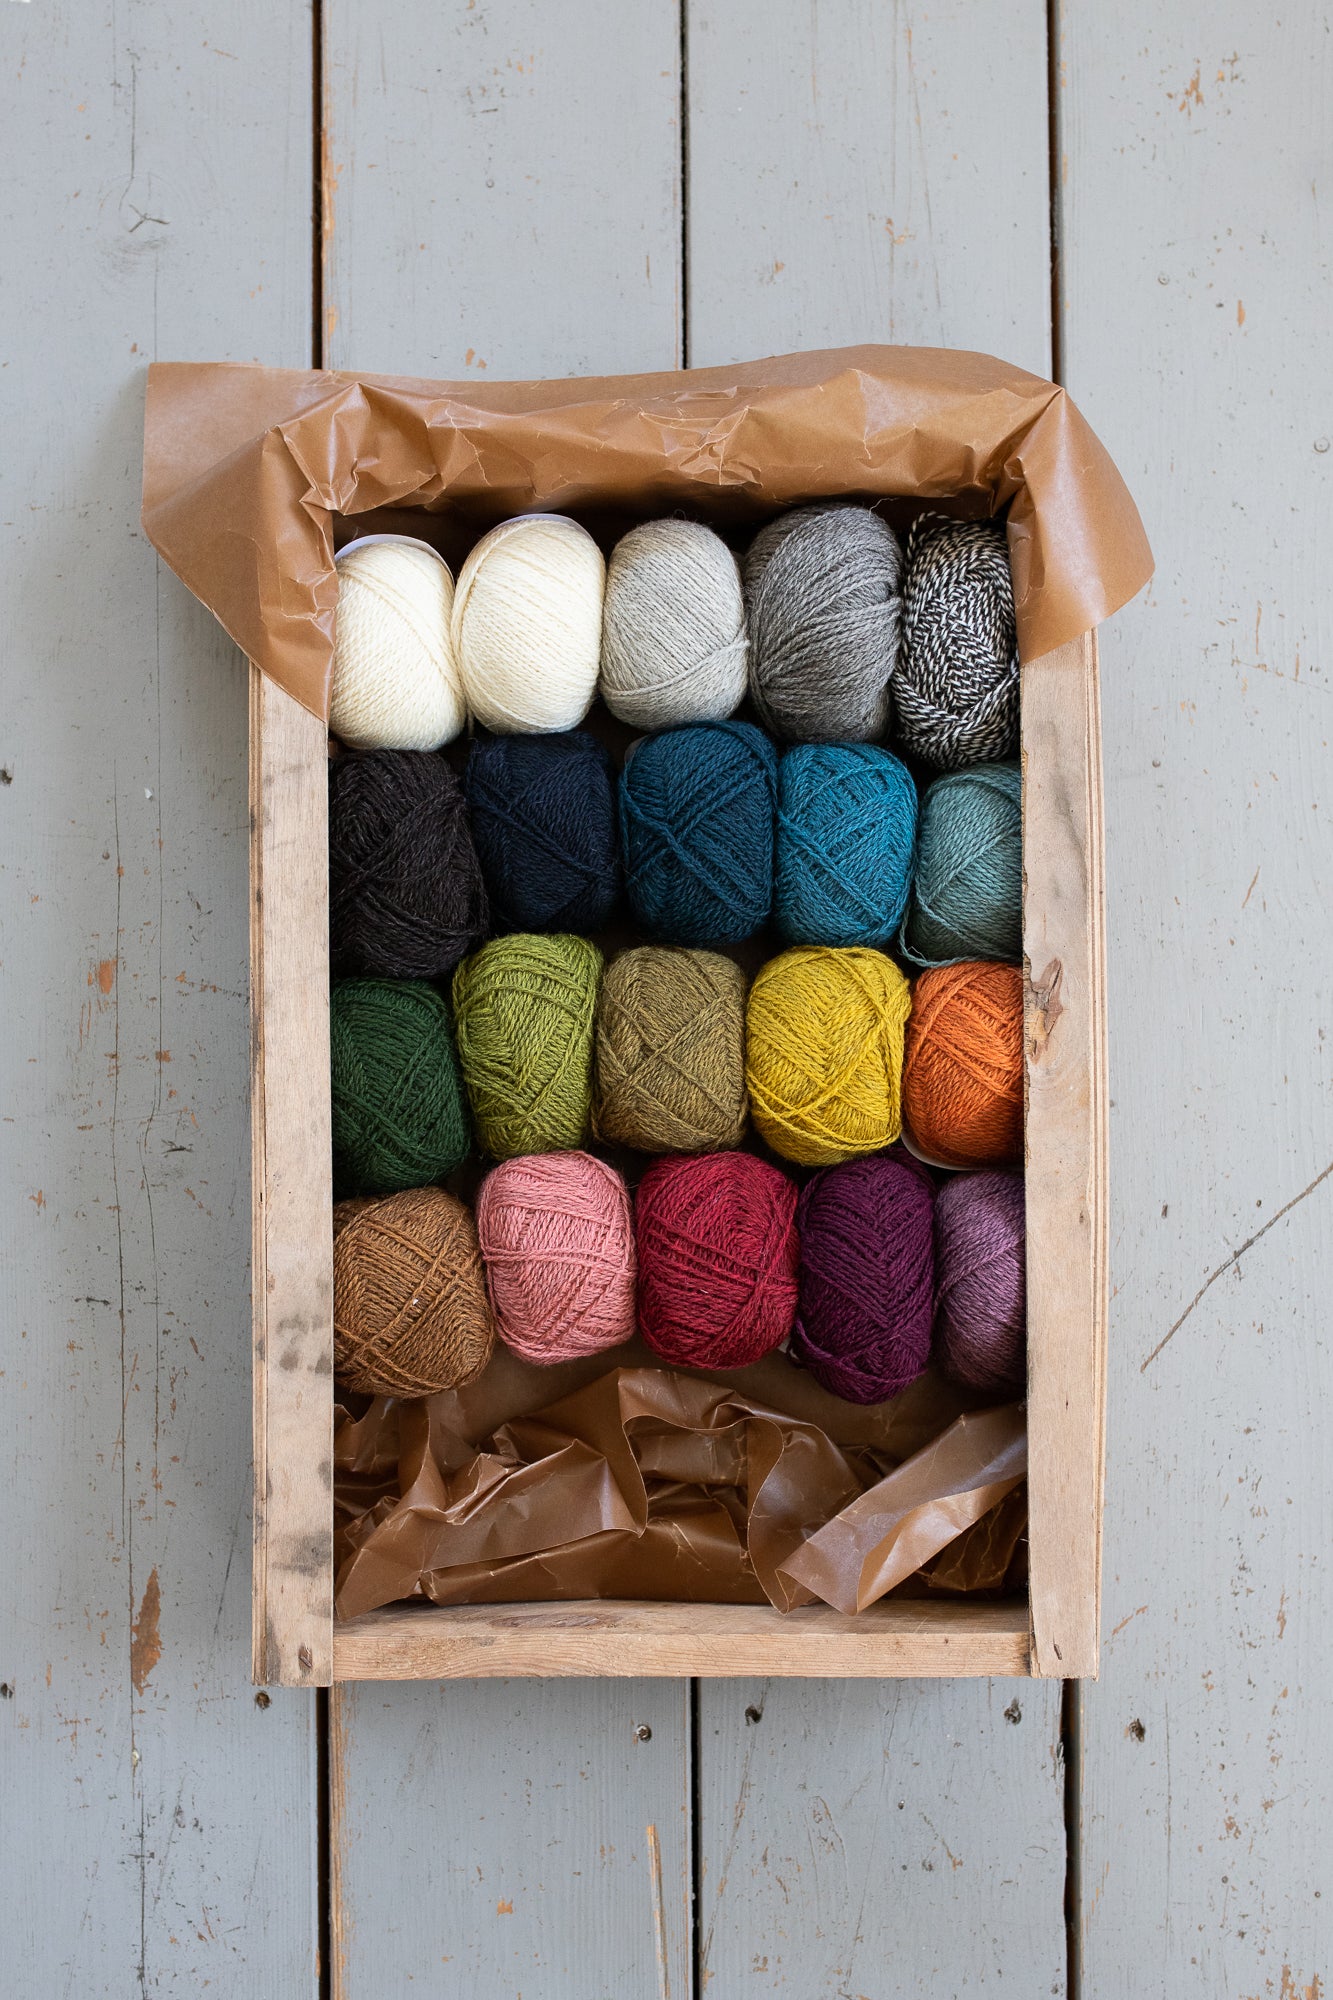 The Birlinn yarn company 4ply